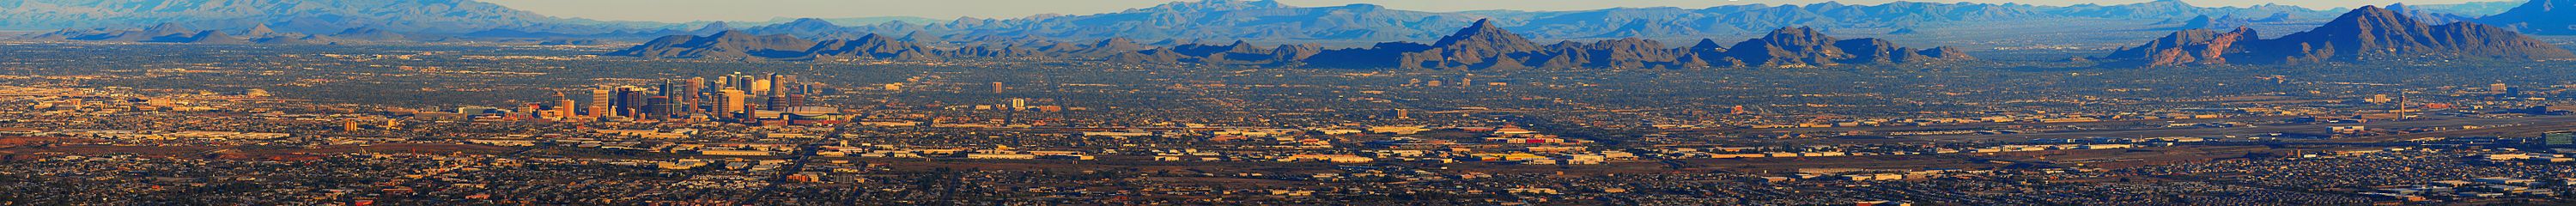 En panoramautsikt över Phoenix från South Mountain Range, vintern 2008  